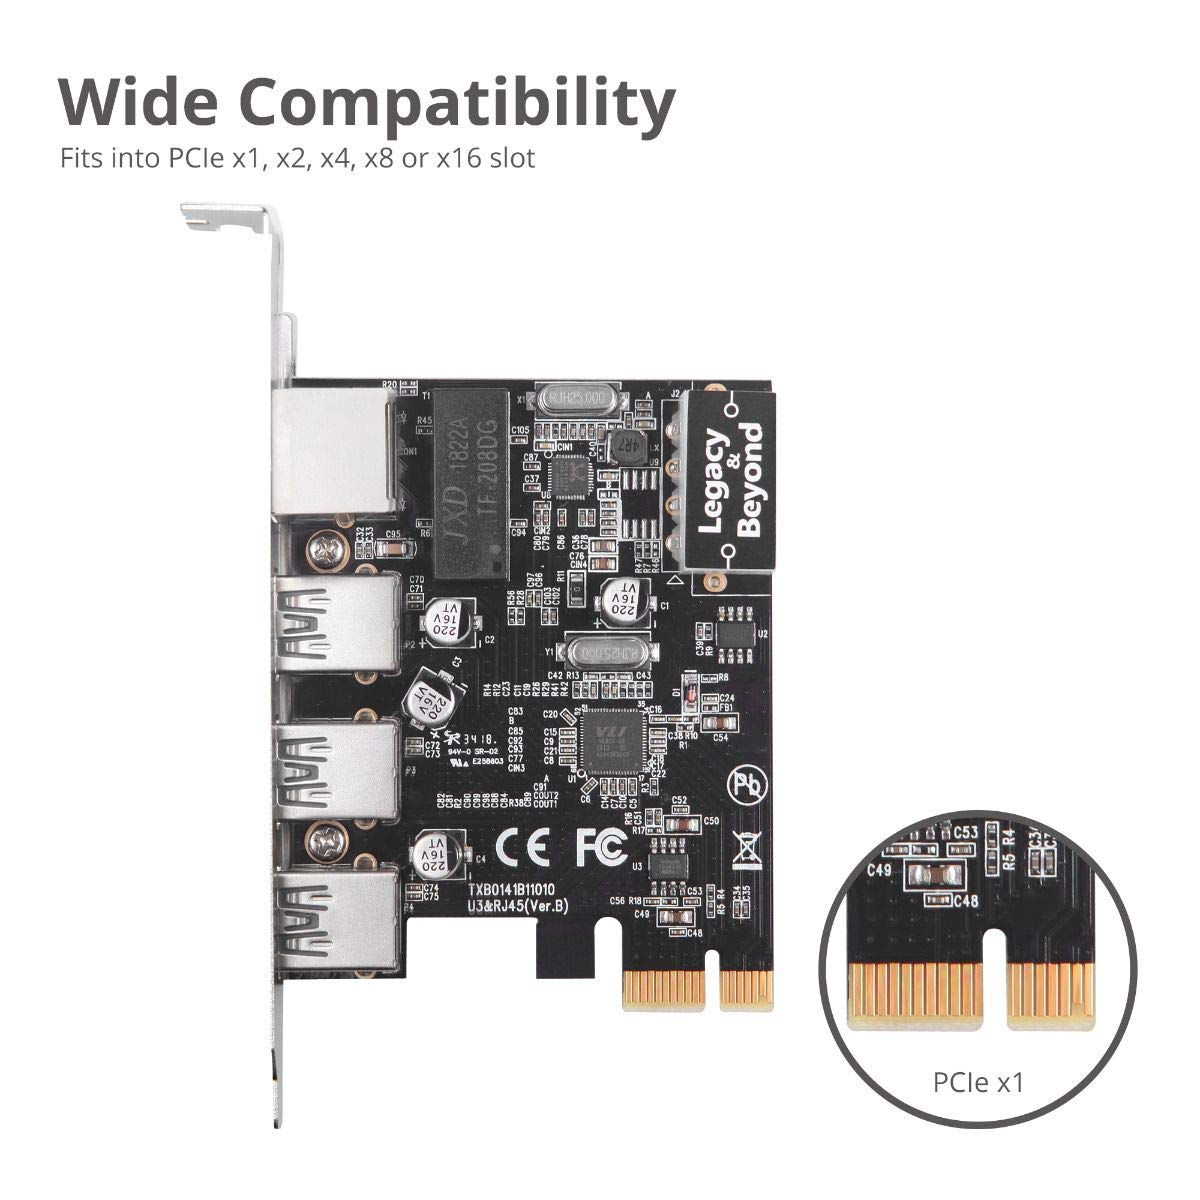 SIIG 3 Port PCI Express USB 3.0 Adapt Card + Gigabit Ethernet LAN - Standard & Low - Profile Windows Server,7,8,8.1,10 PCsPCs (LB-US0614-S1)